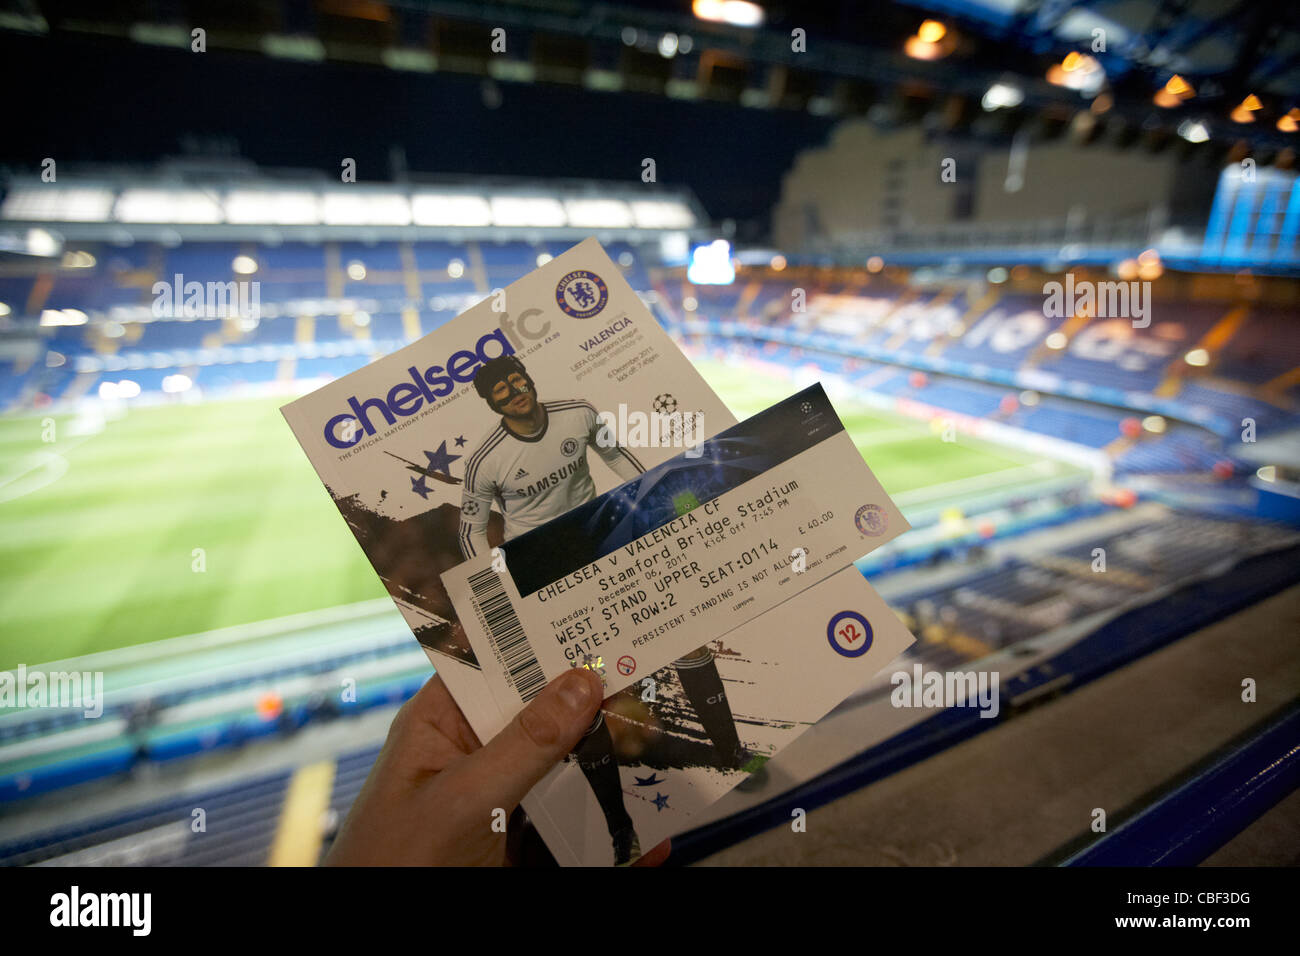 Chelsea FC Stamford Bridge Stadium Editorial Stock Photo - Image of chelsea,  europe: 56377513